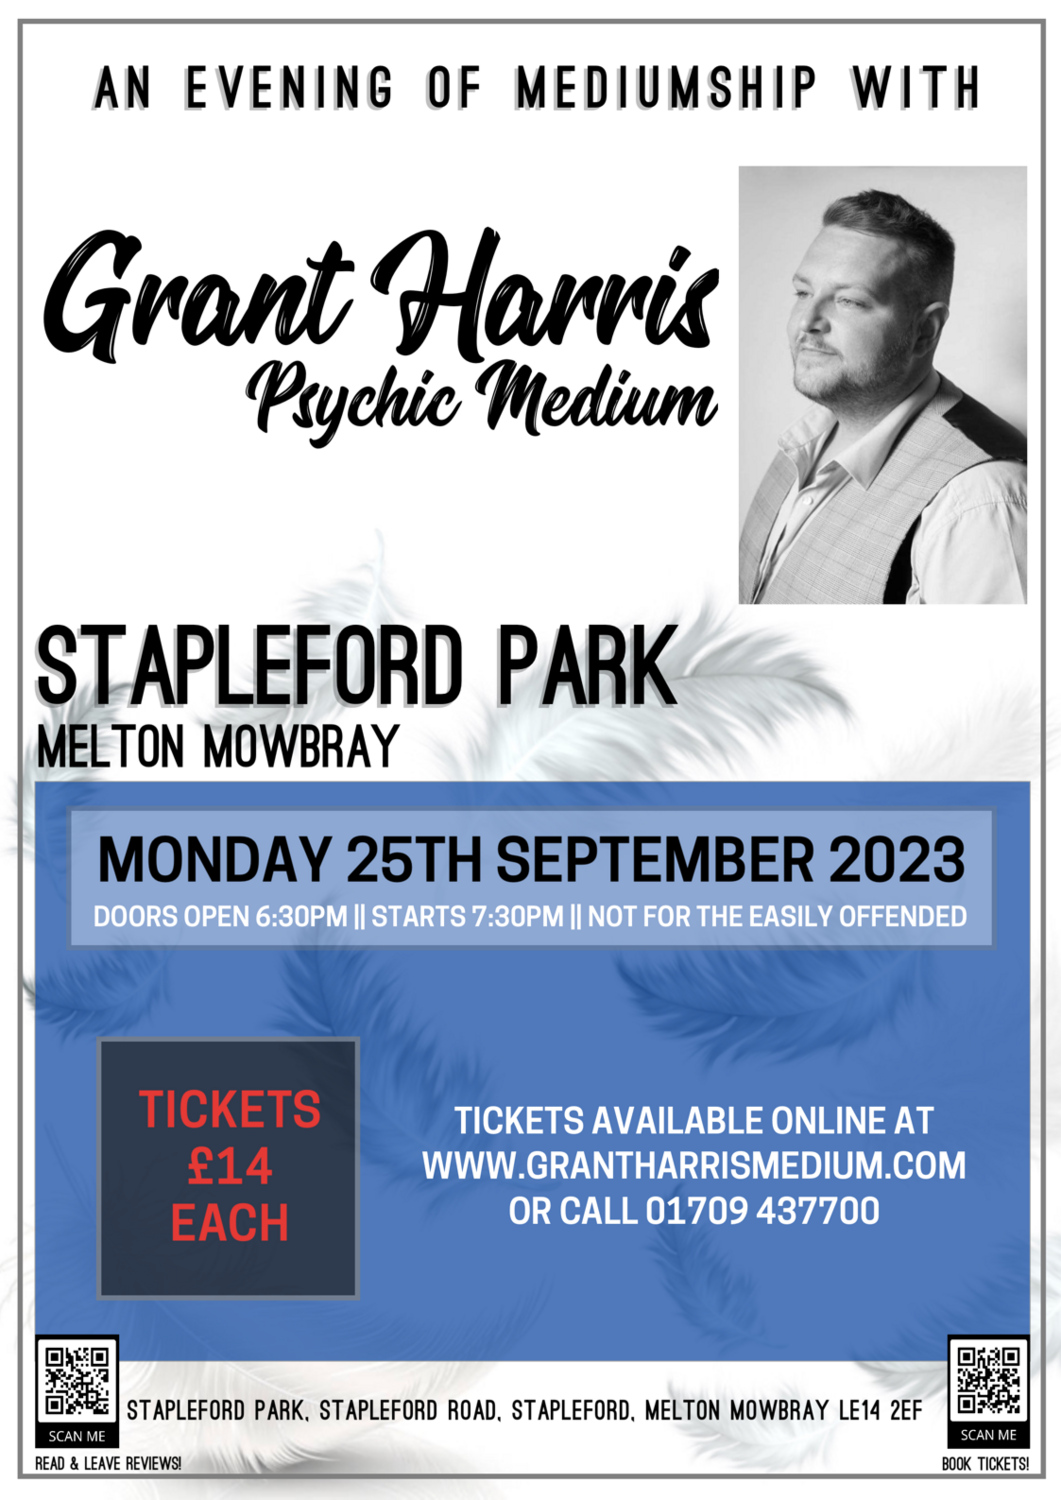 Stapleford Park Hotel, Melton Mowbray, Monday 25th September 2023